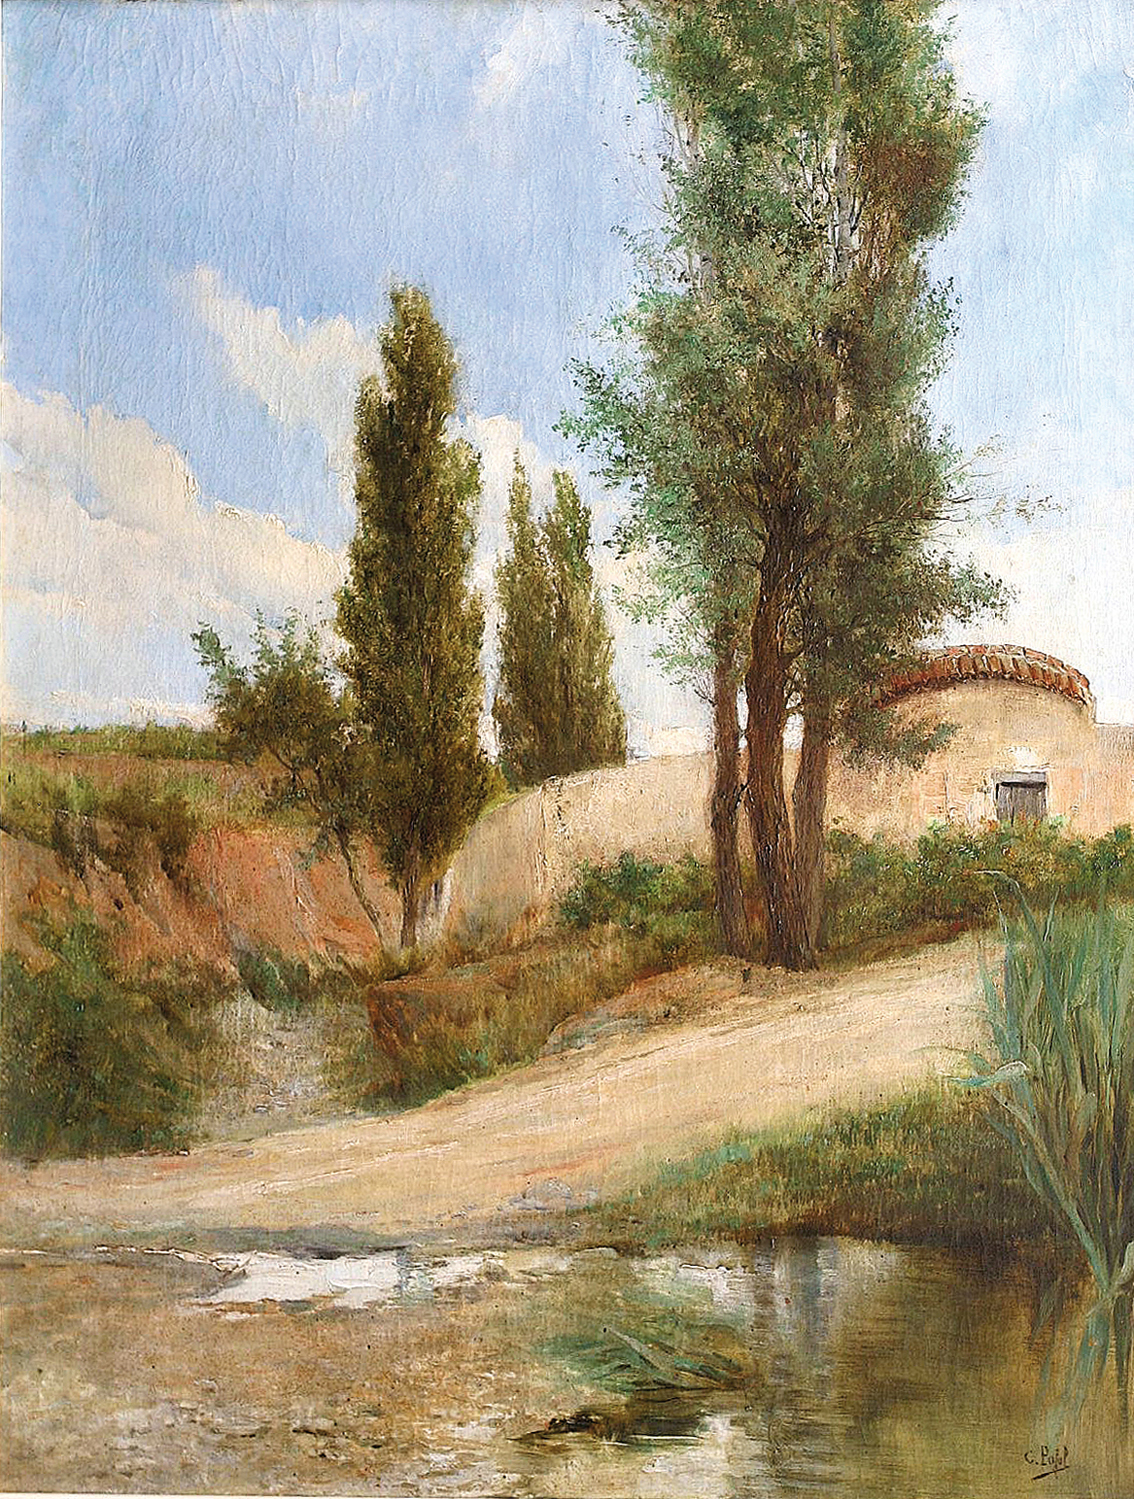 A Spanish landscape